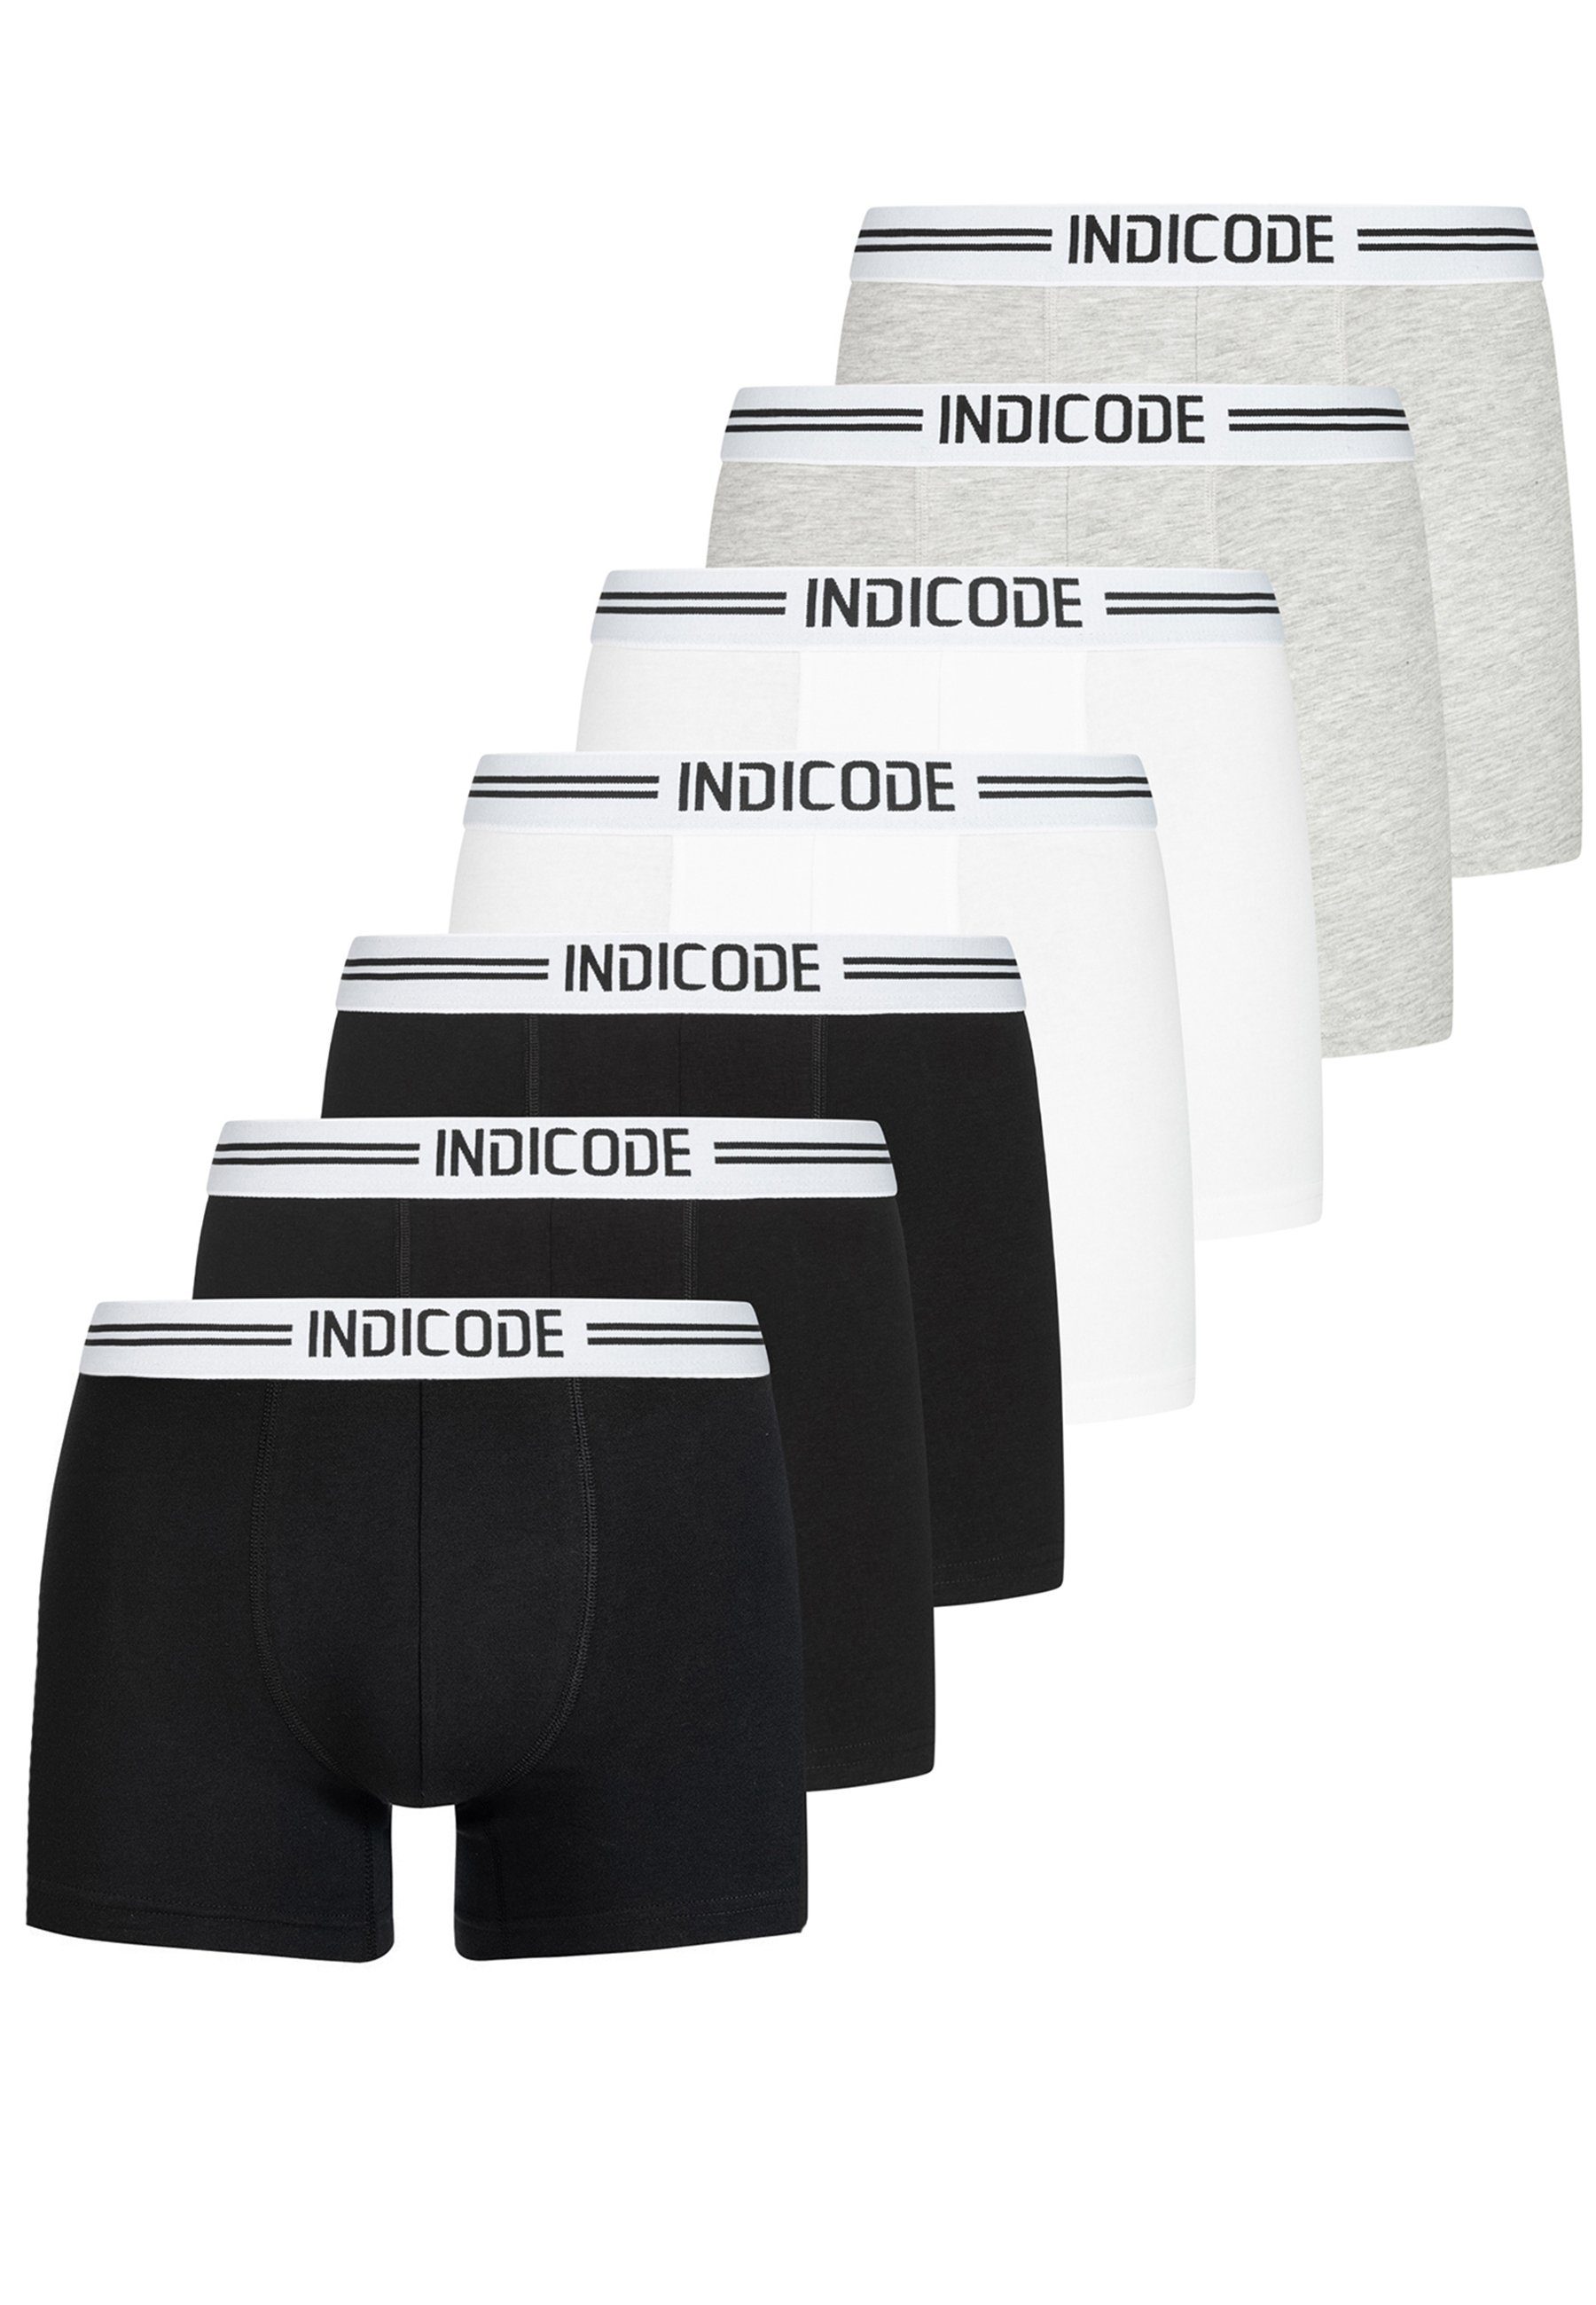 Copenhagen Indicode Boxershorts White/Grey/Black